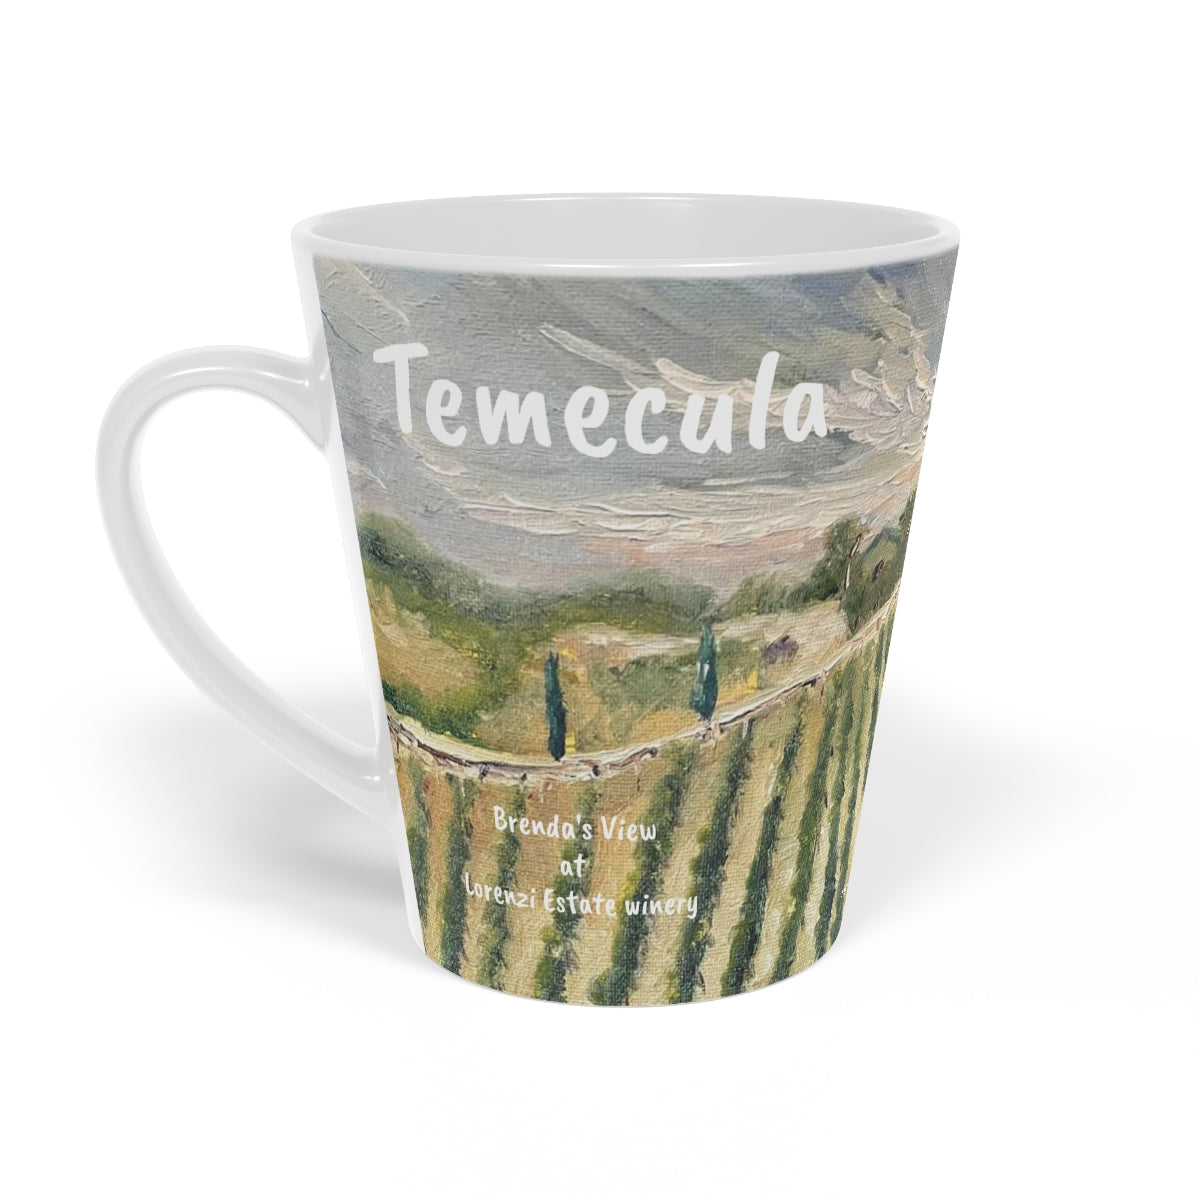 Taza Temecula Latte, 12 oz con pintura de viñedo "Brenda's View at Lorenzi Estate"